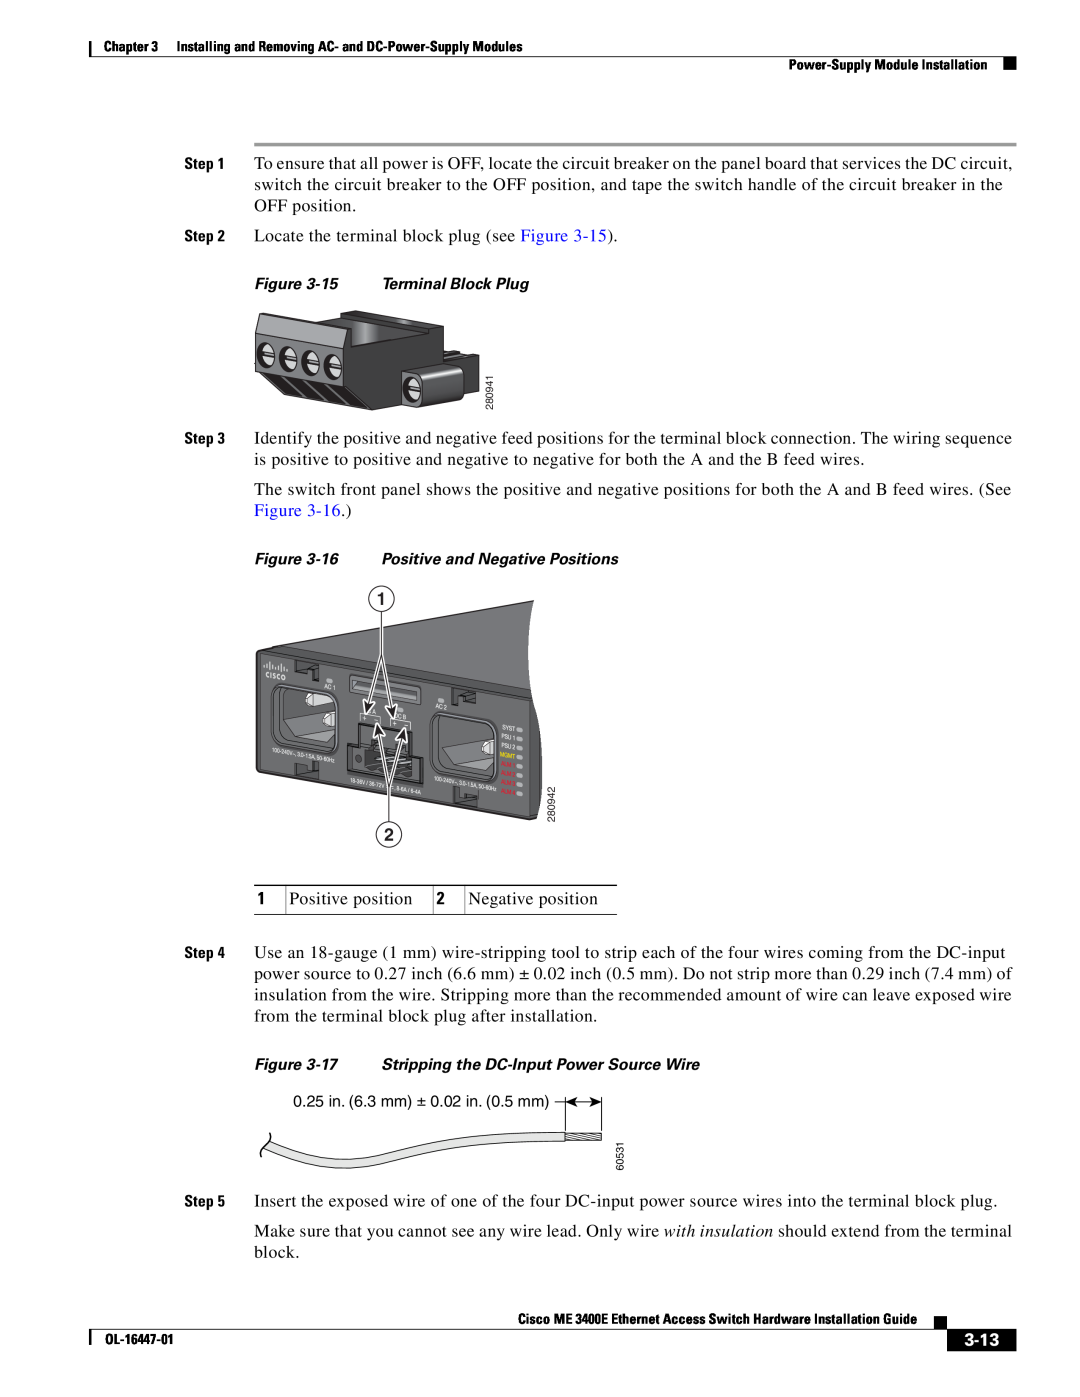 Cisco Systems OL-16447-01 manual 3-13, Locate the terminal block plug see Figure 